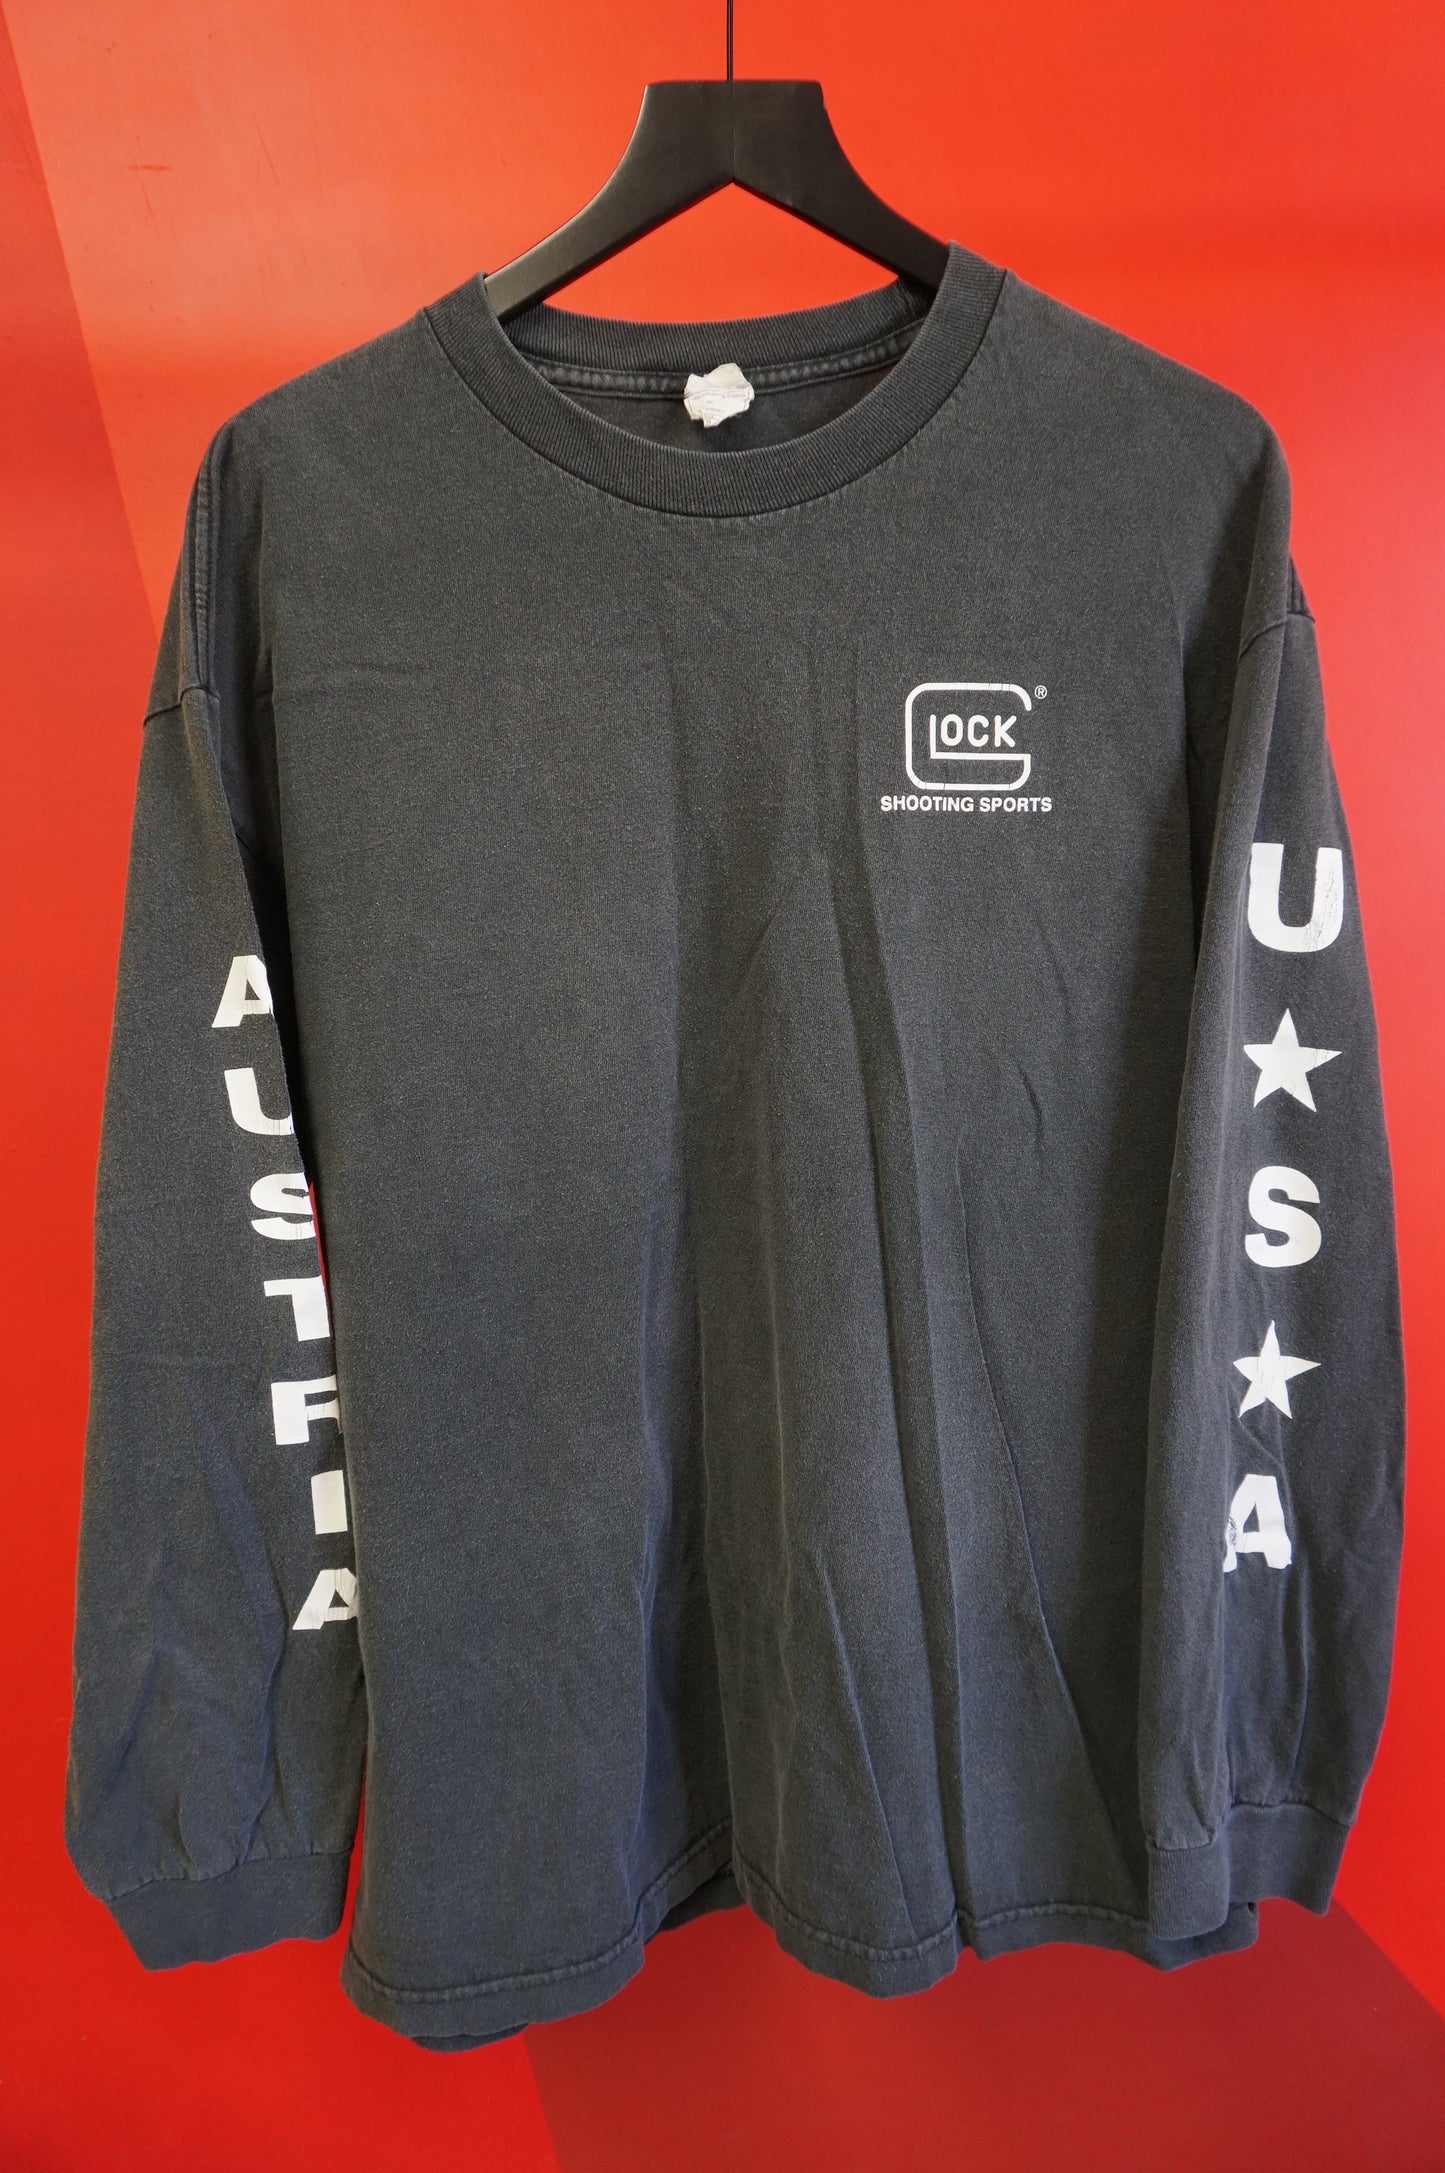 (XL) Glock Shooting Sports LS T-Shirt